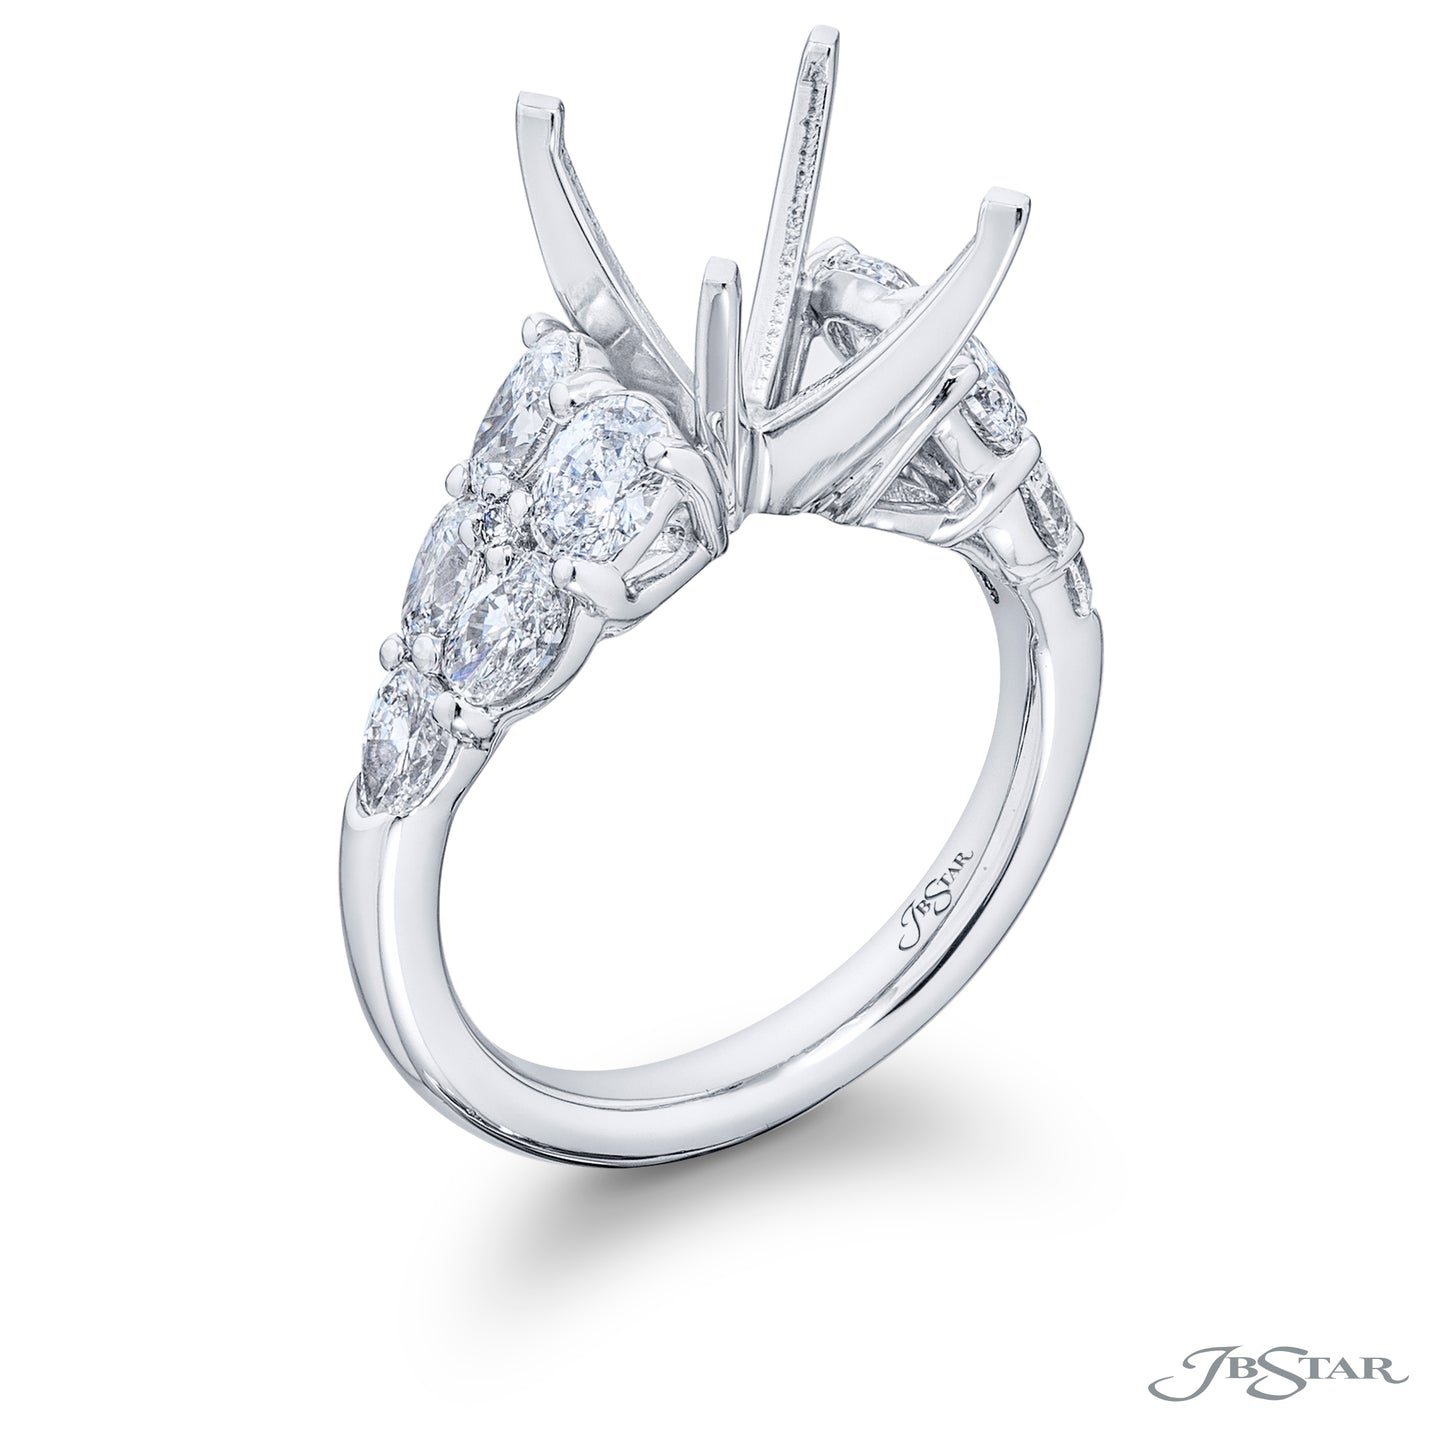 JB Star Platinum Straight Diamond Semi-Mount Engagement Ring - Diamond Semi-Mount Rings